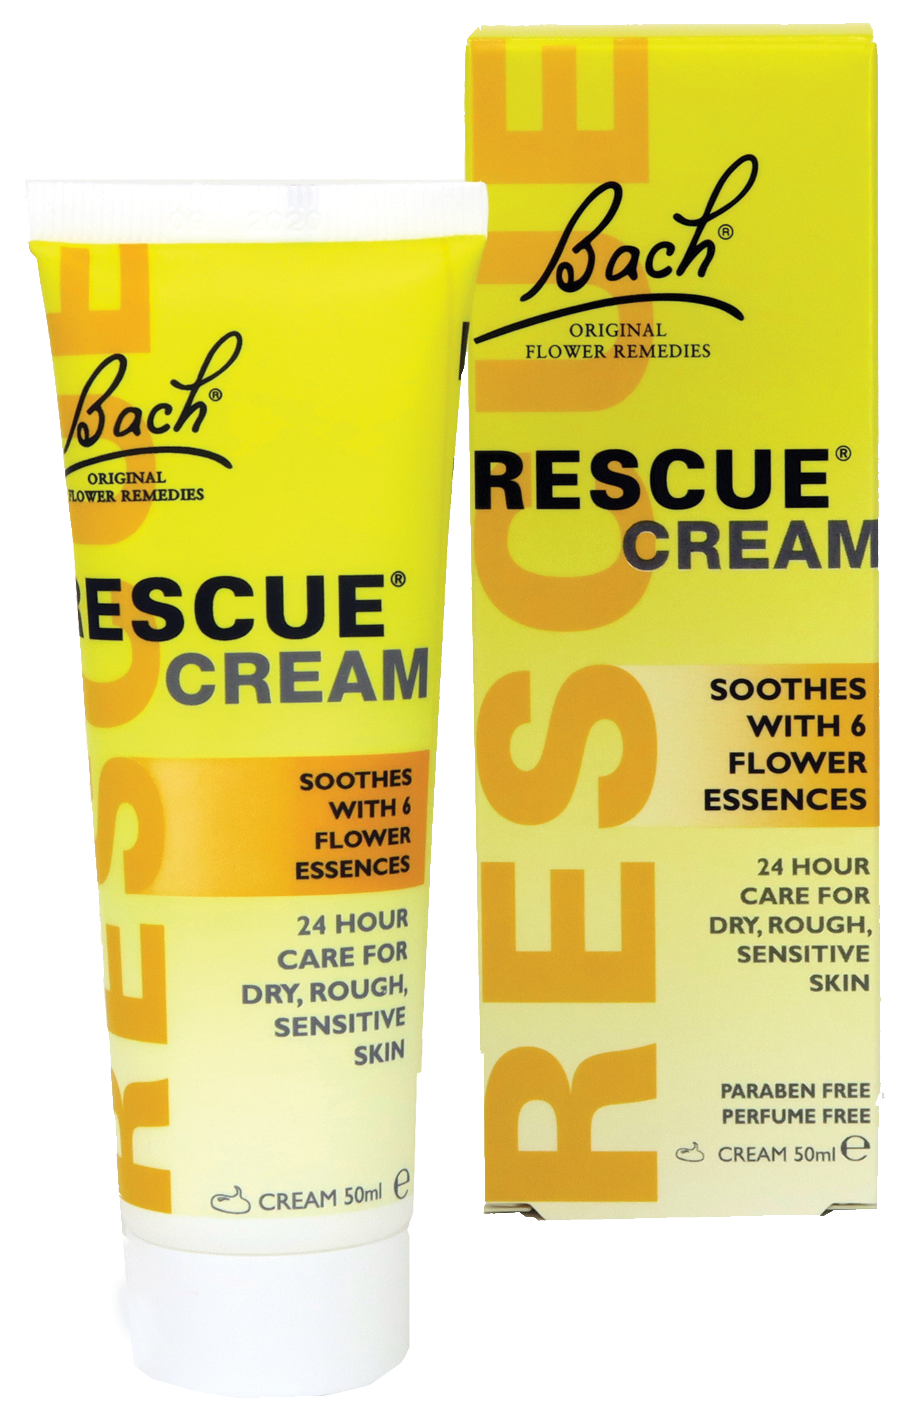 Rescue Cream - Information and Sale